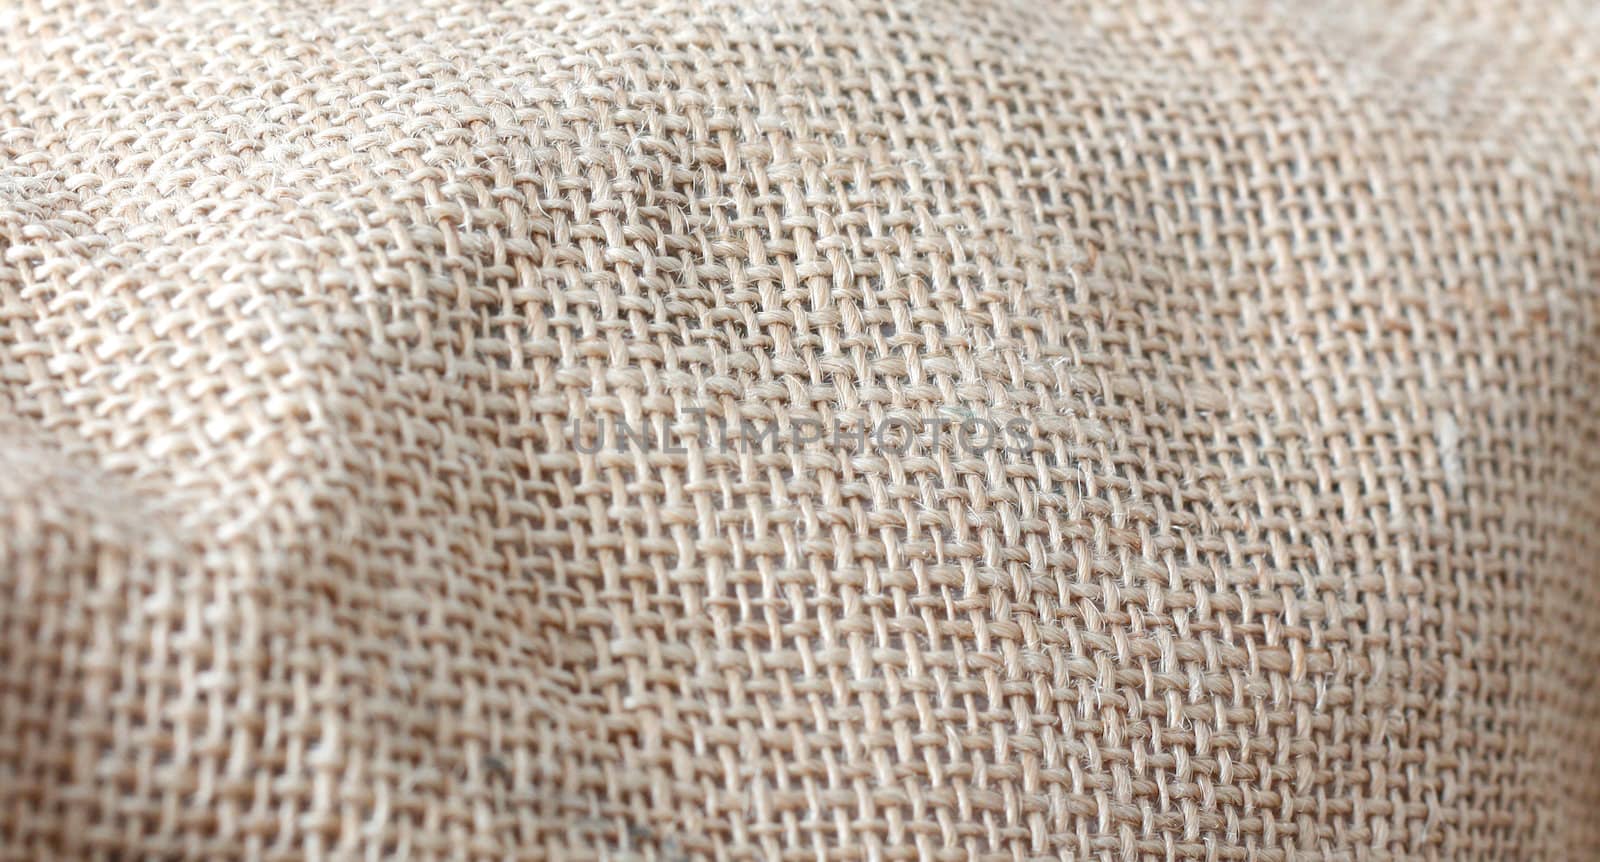 Coffee bag textile